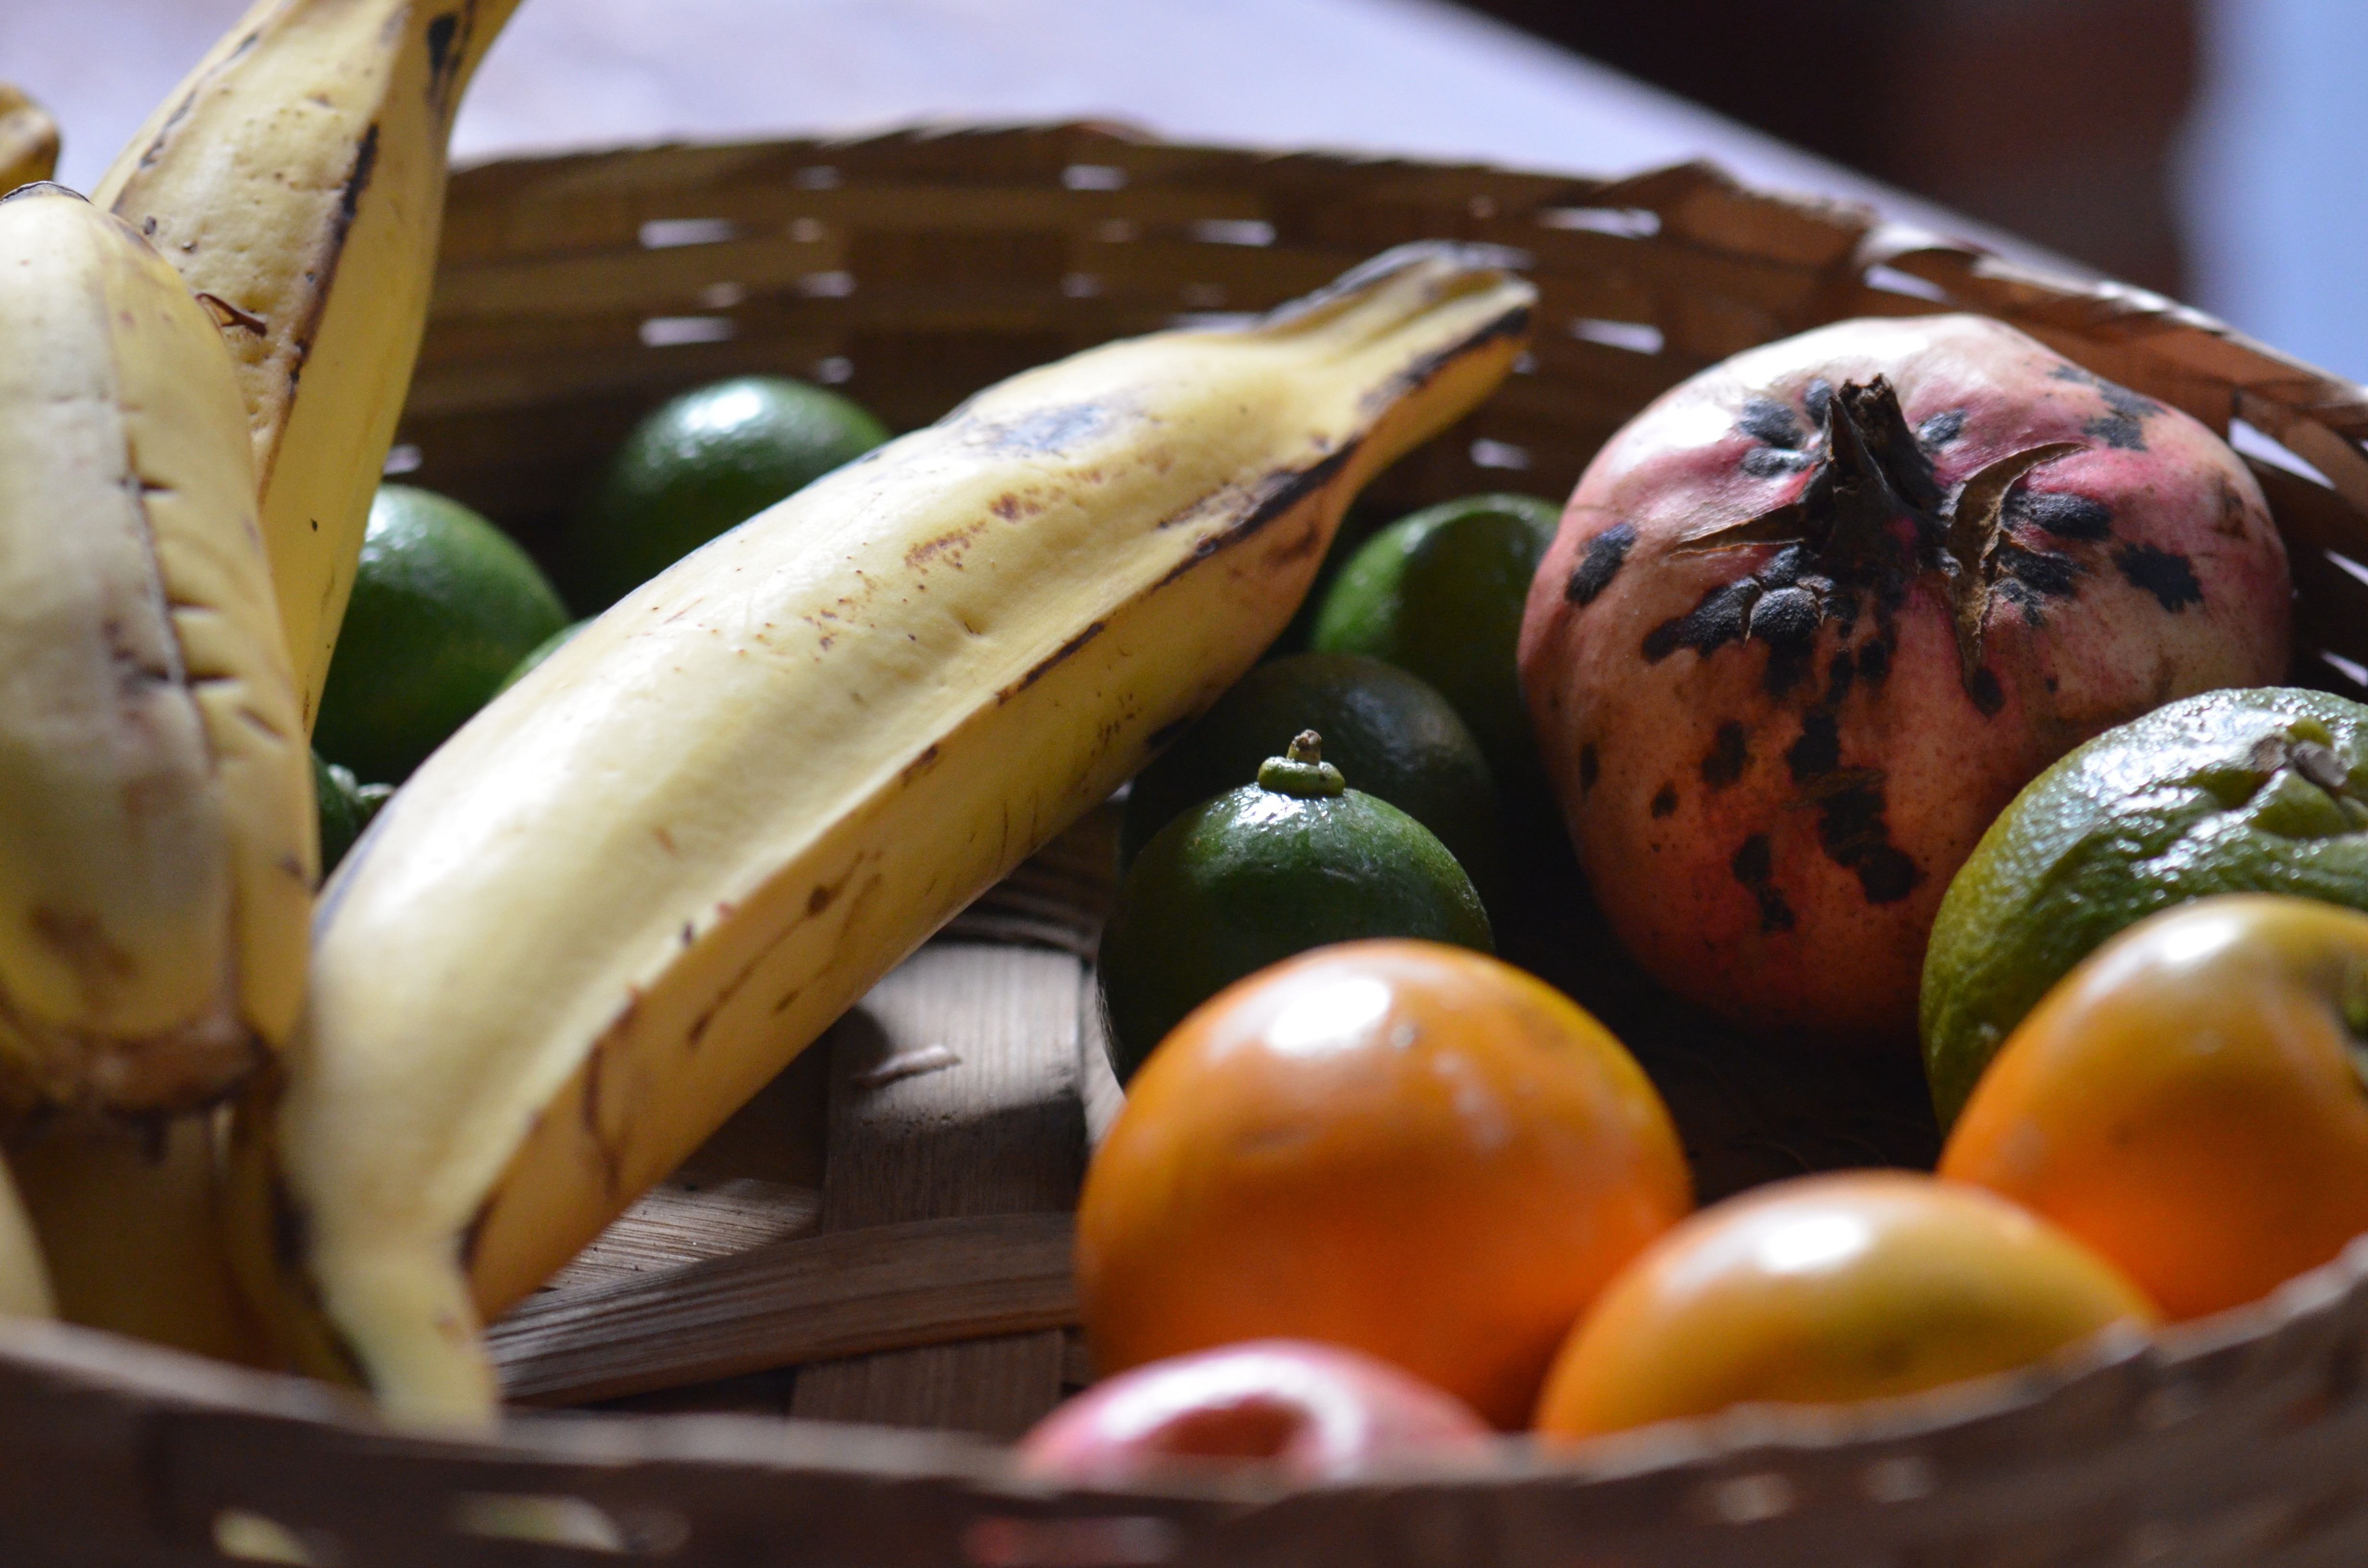 banana fruit orange fruit and calamandin